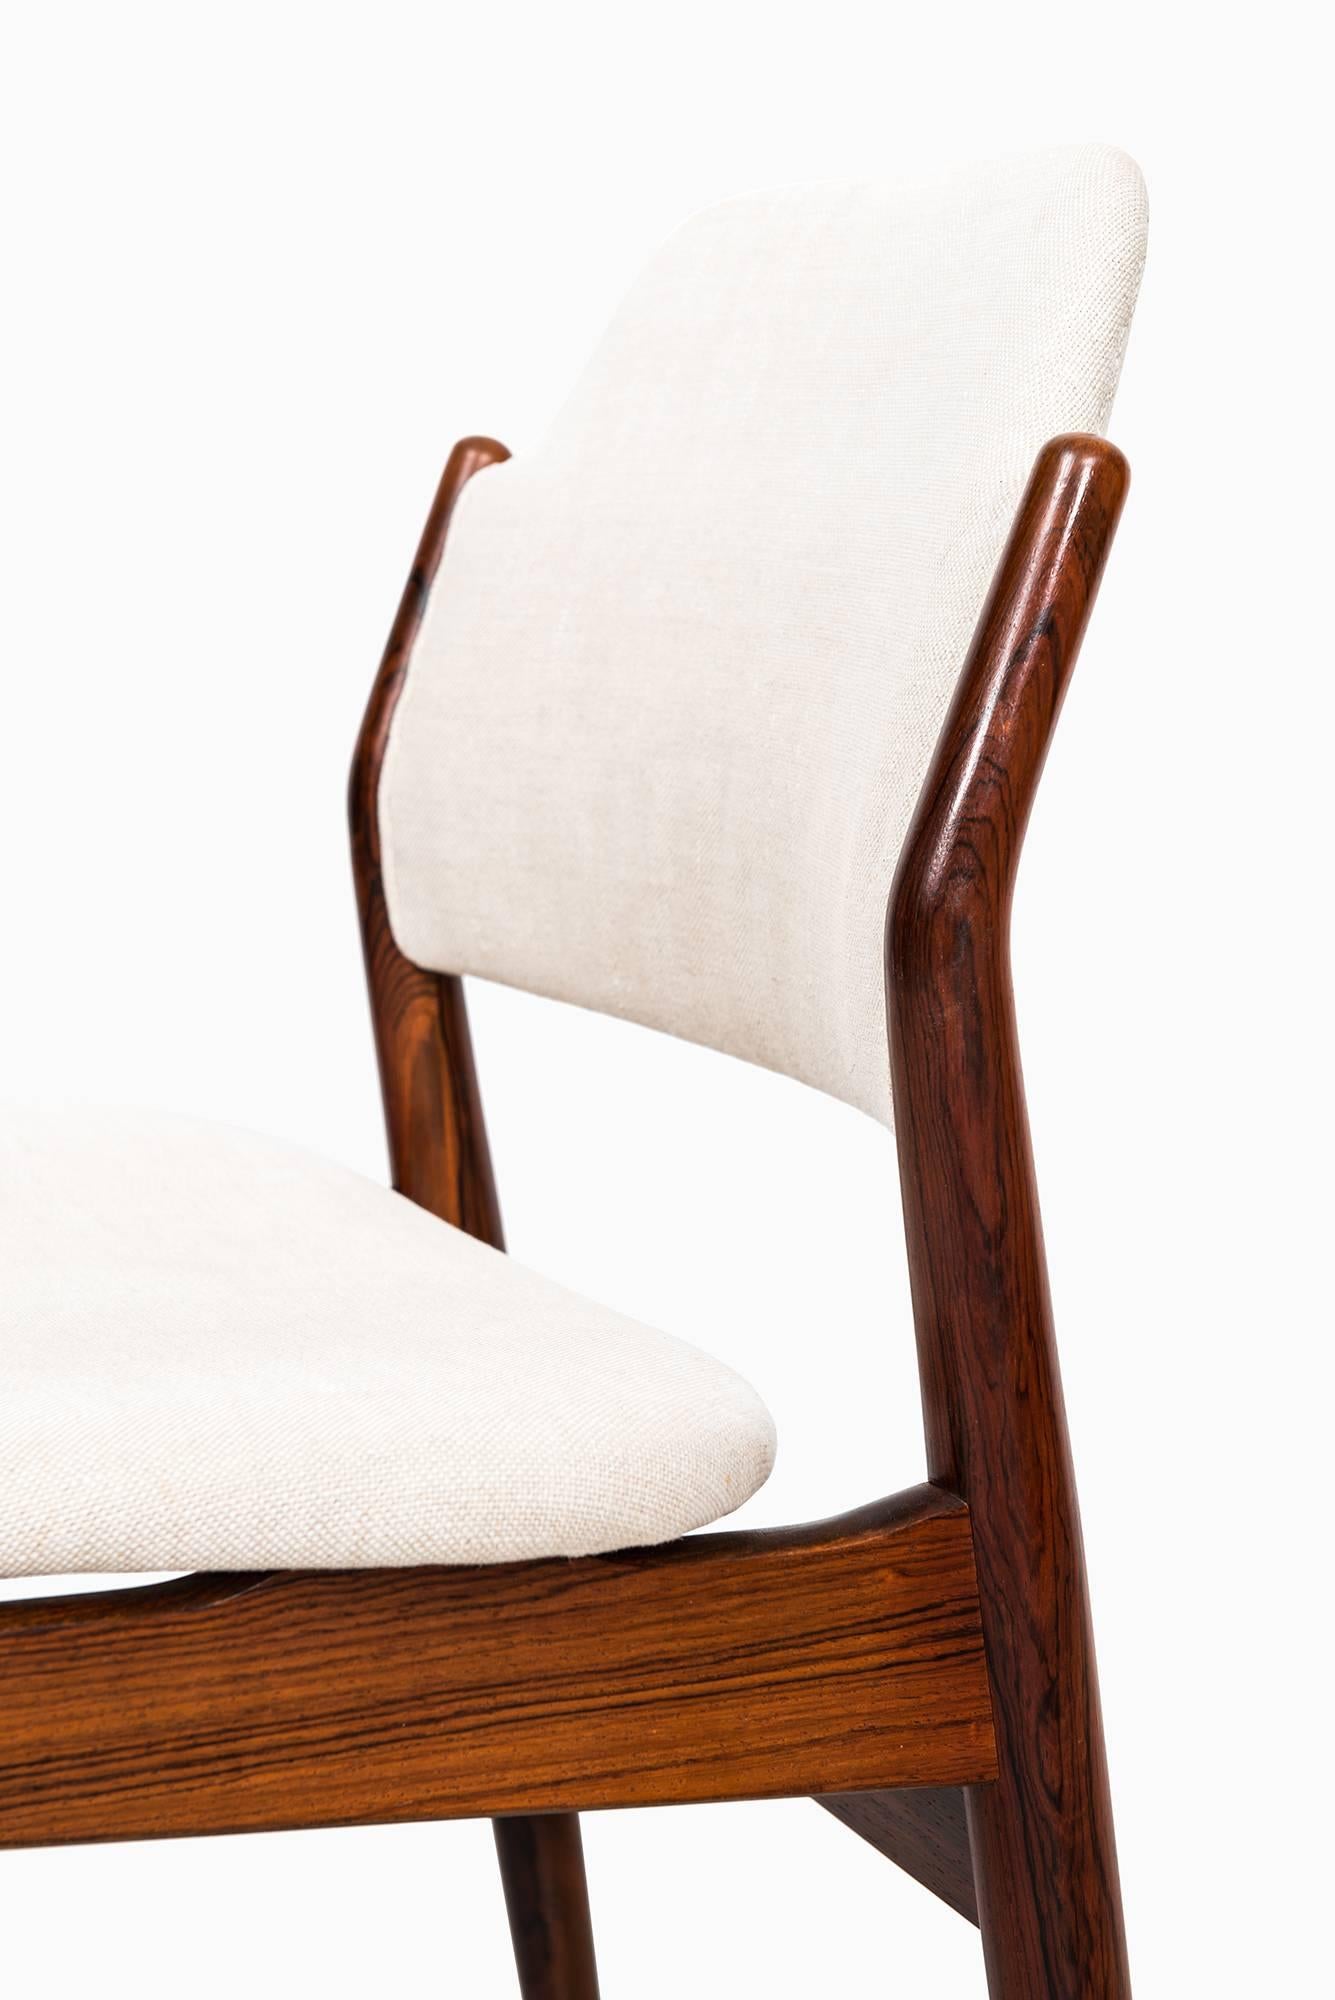 Scandinavian Modern Arne Vodder Dining Chairs Model 462 by Sibast Møbelfabrik in Denmark